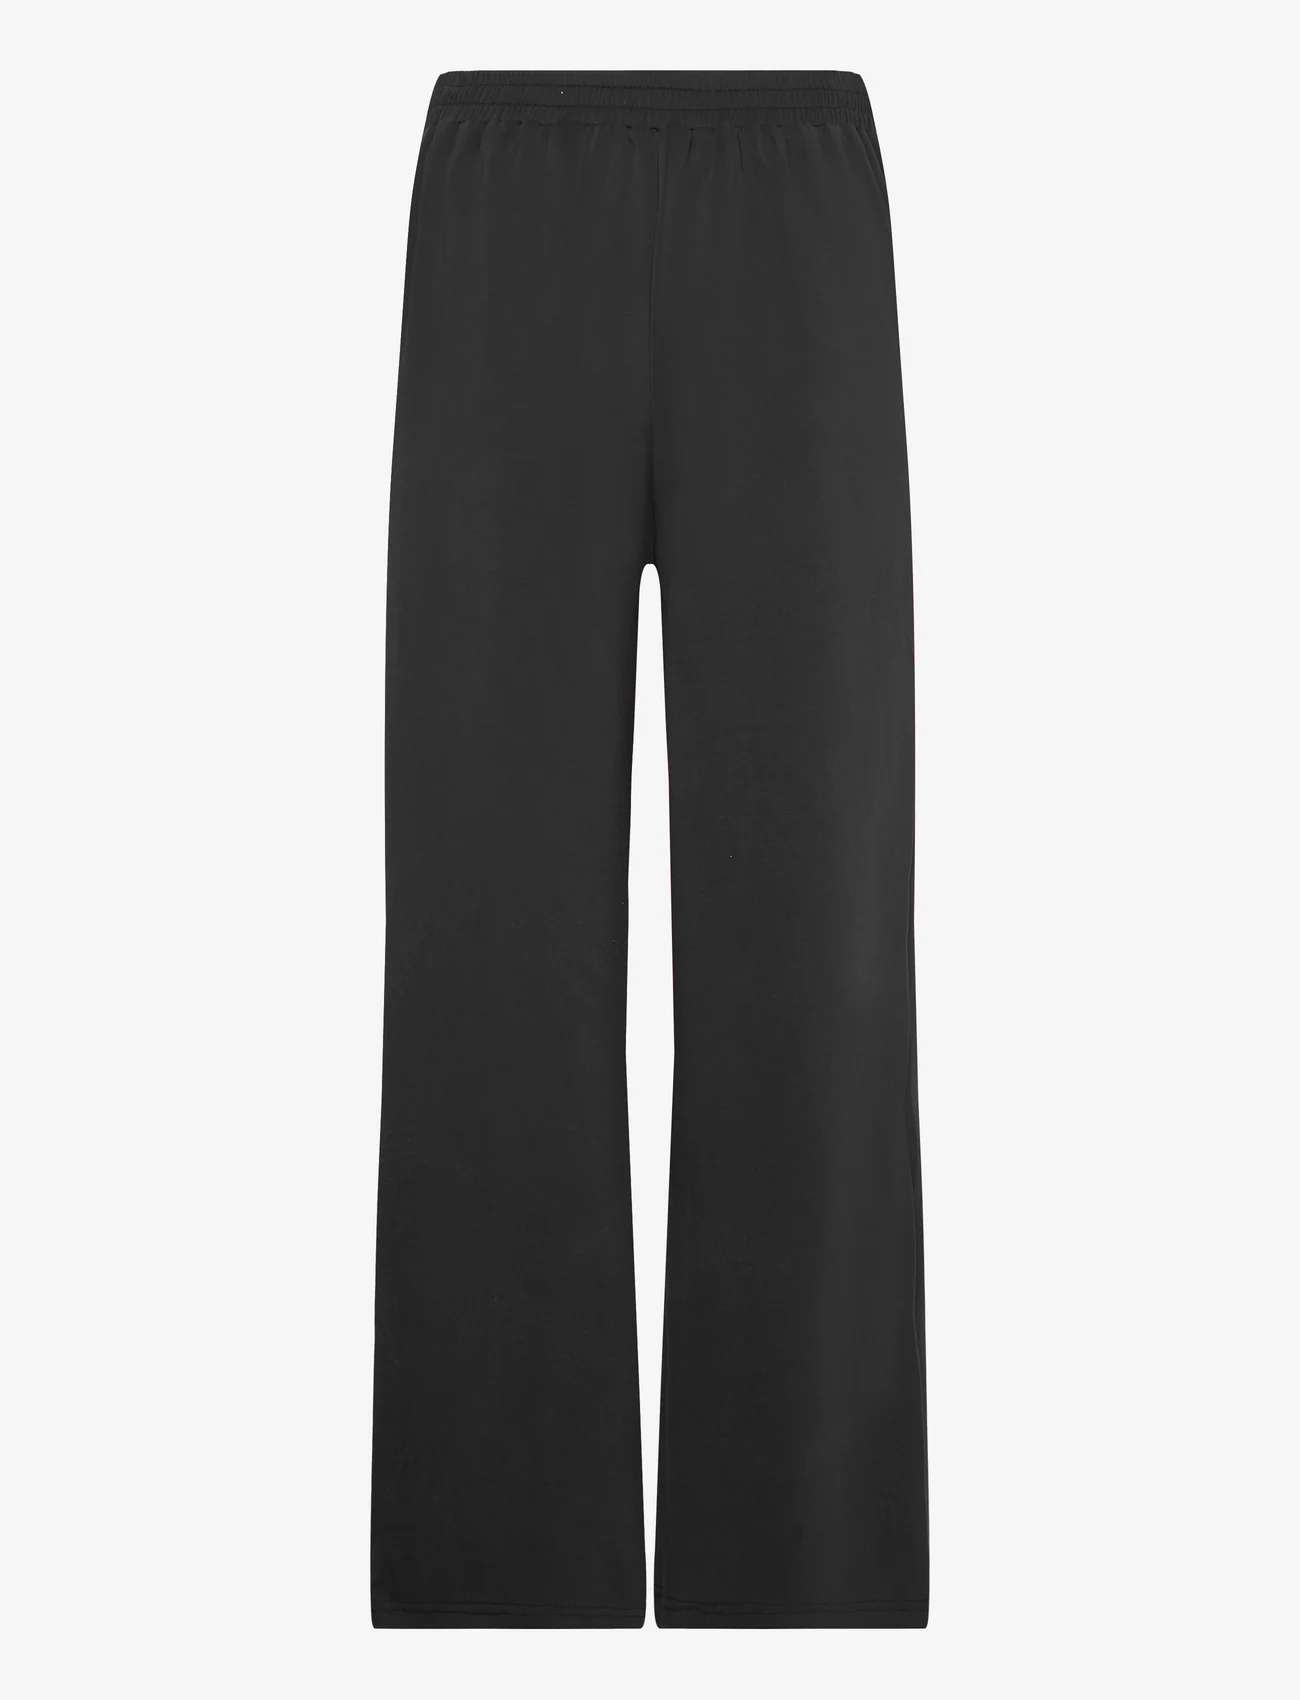 My Essential Wardrobe - ElleMW Pant - suorat housut - black - 1